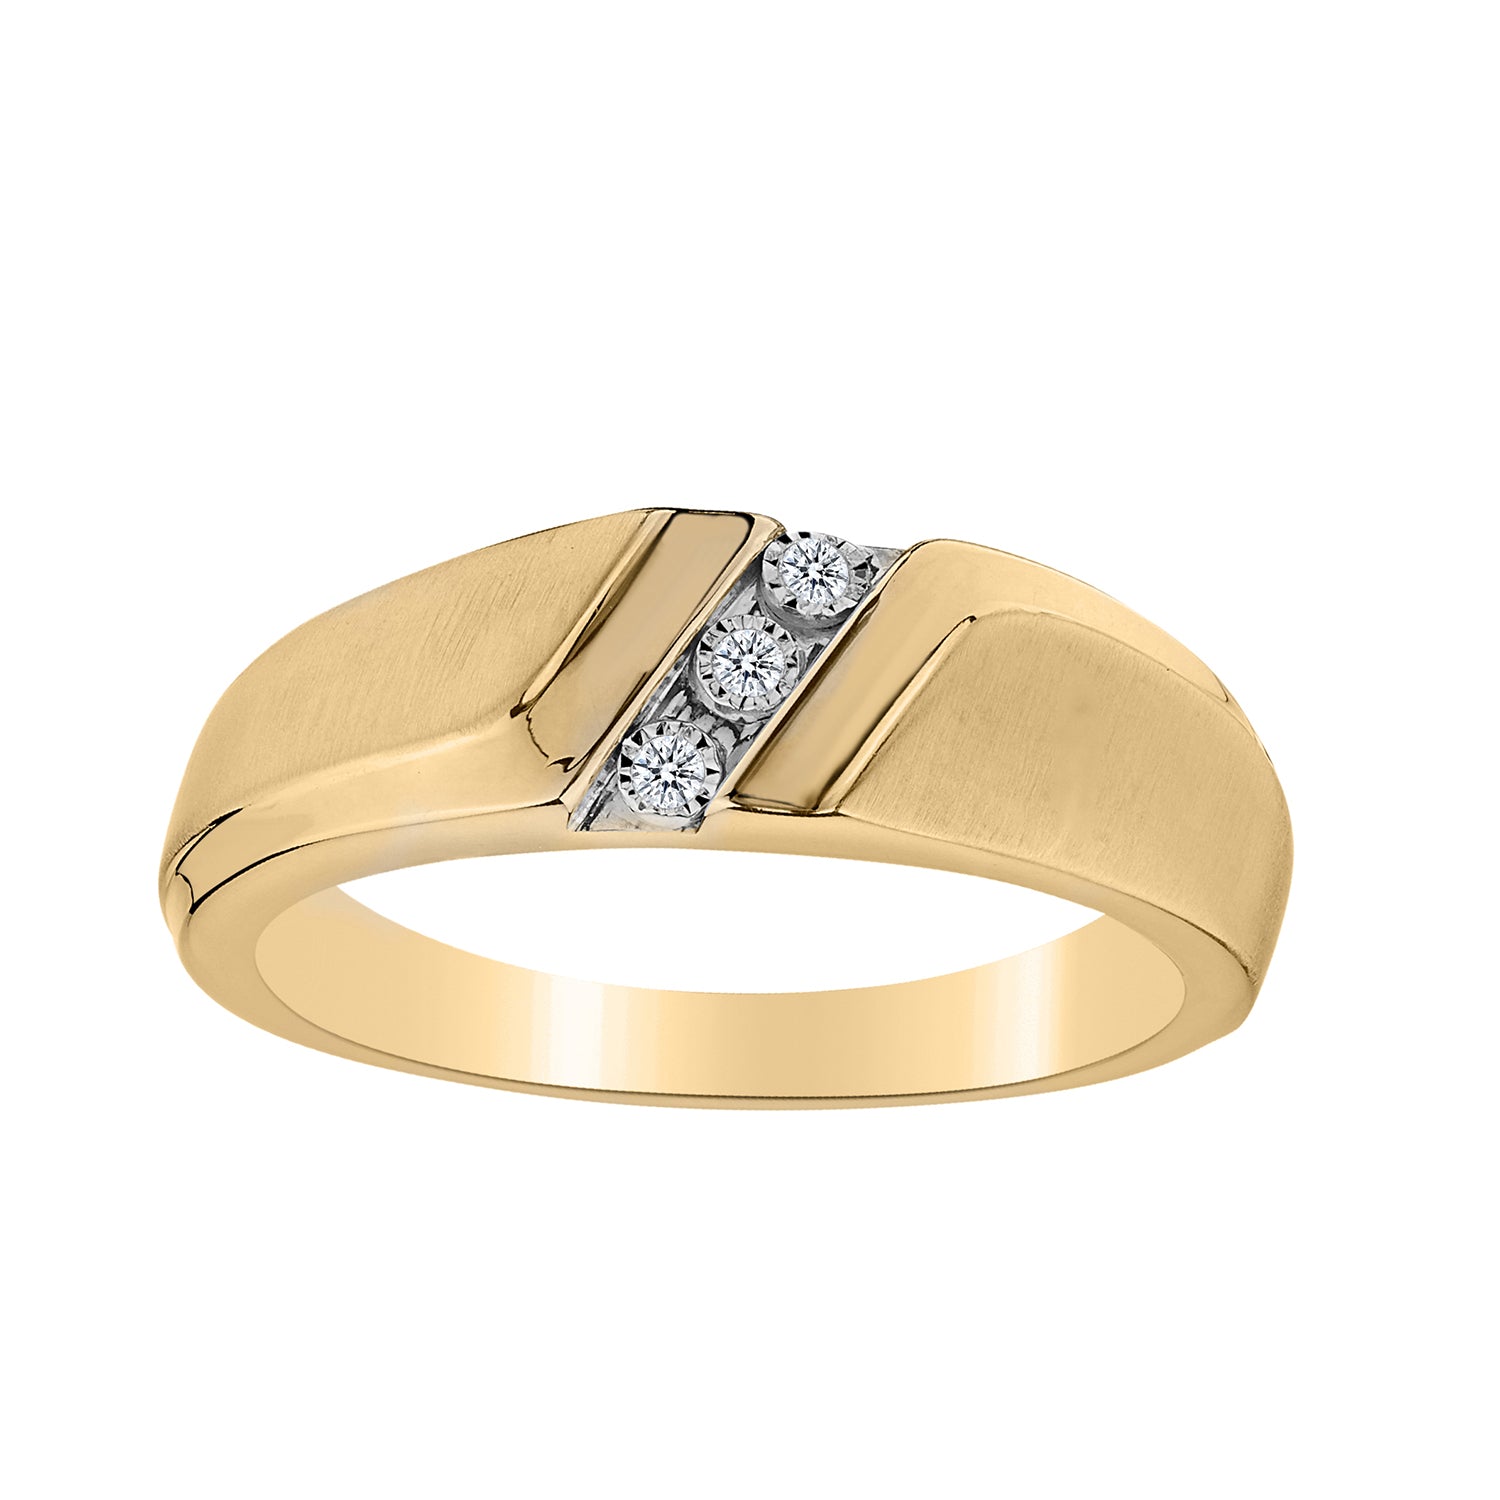 .05 CARAT DIAMOND "PAST, PRESENT, FUTURE" GENTLEMAN'S RING, 10kt YELLOW GOLD. Men’s Rings. - Griffin Jewellery Designs